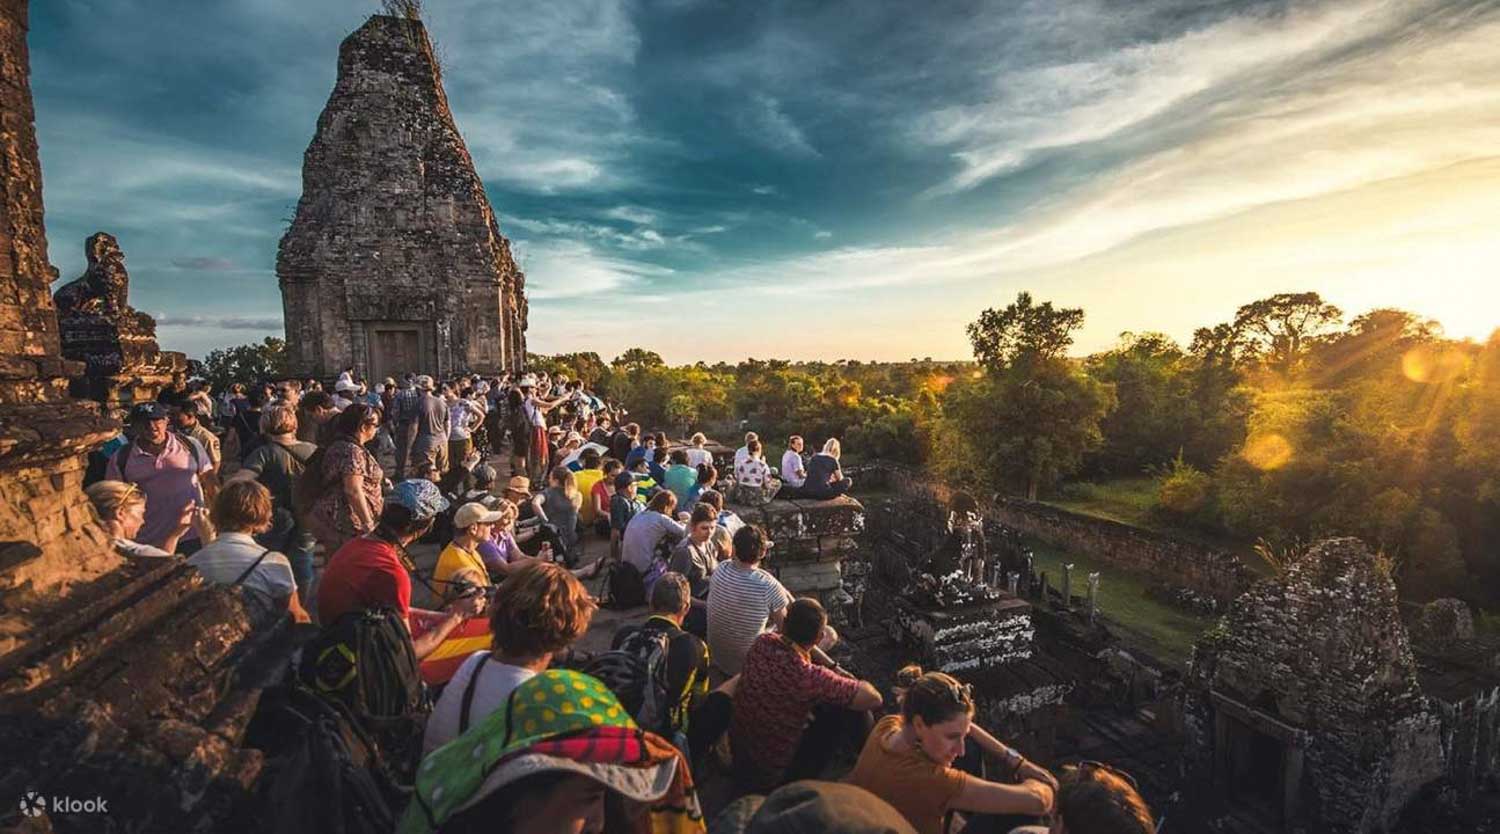 AngkorWatandnearbytemplesdaytour